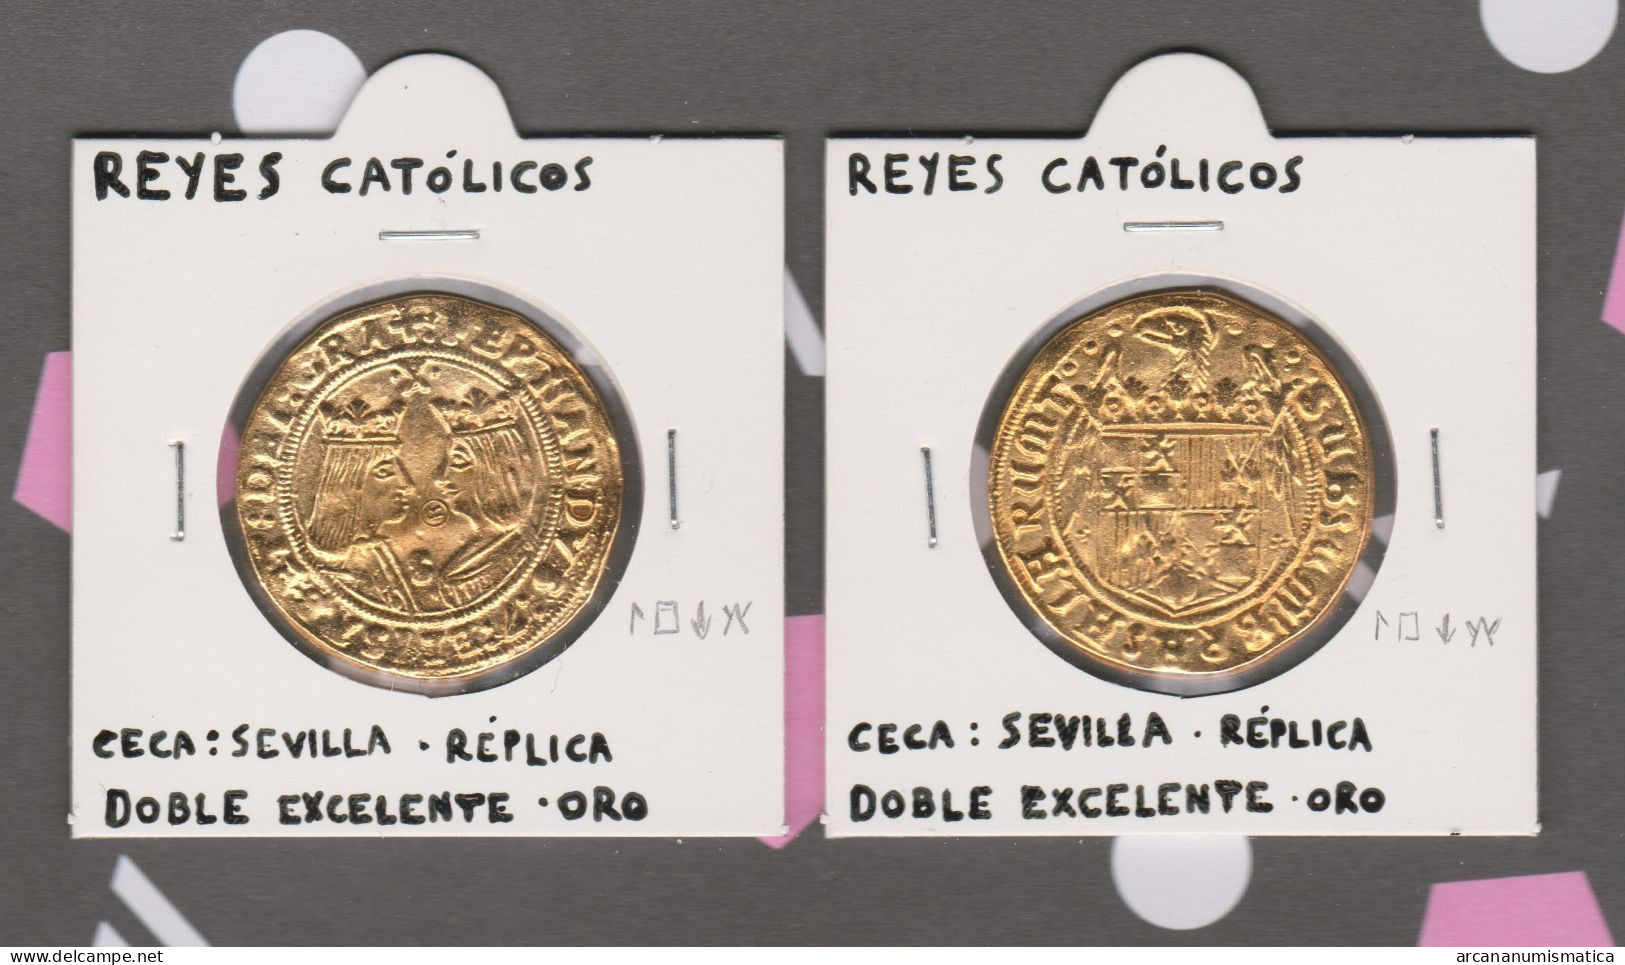 REYES CATOLICOS  DOBLE EXCELENTE - ORO CECA: SEVILLA  Réplica   T-DL-13.434 - Imitationen, Nachahmungen